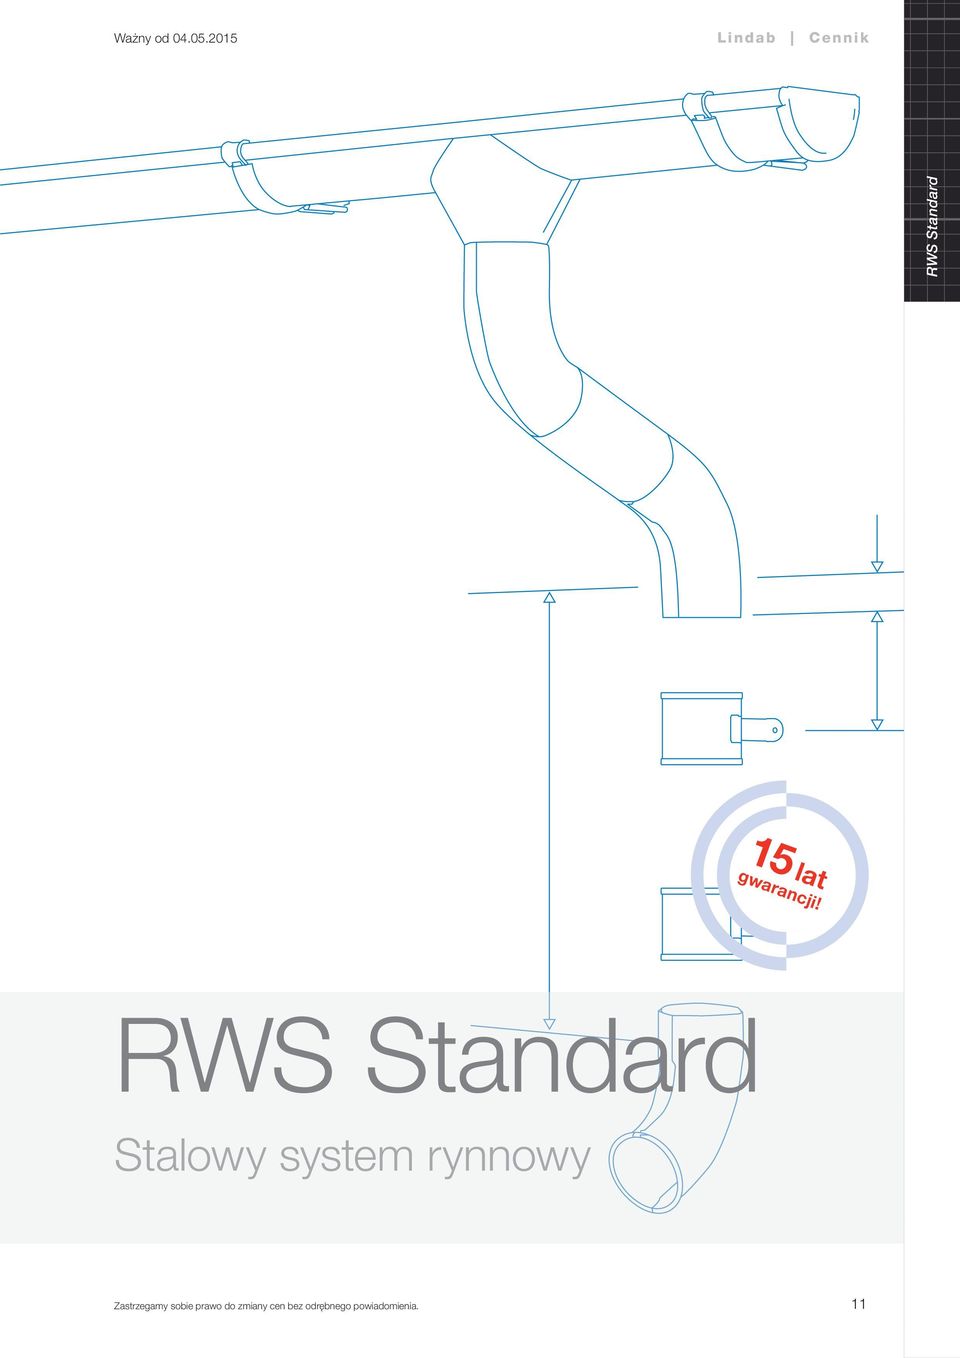 RWS Standard